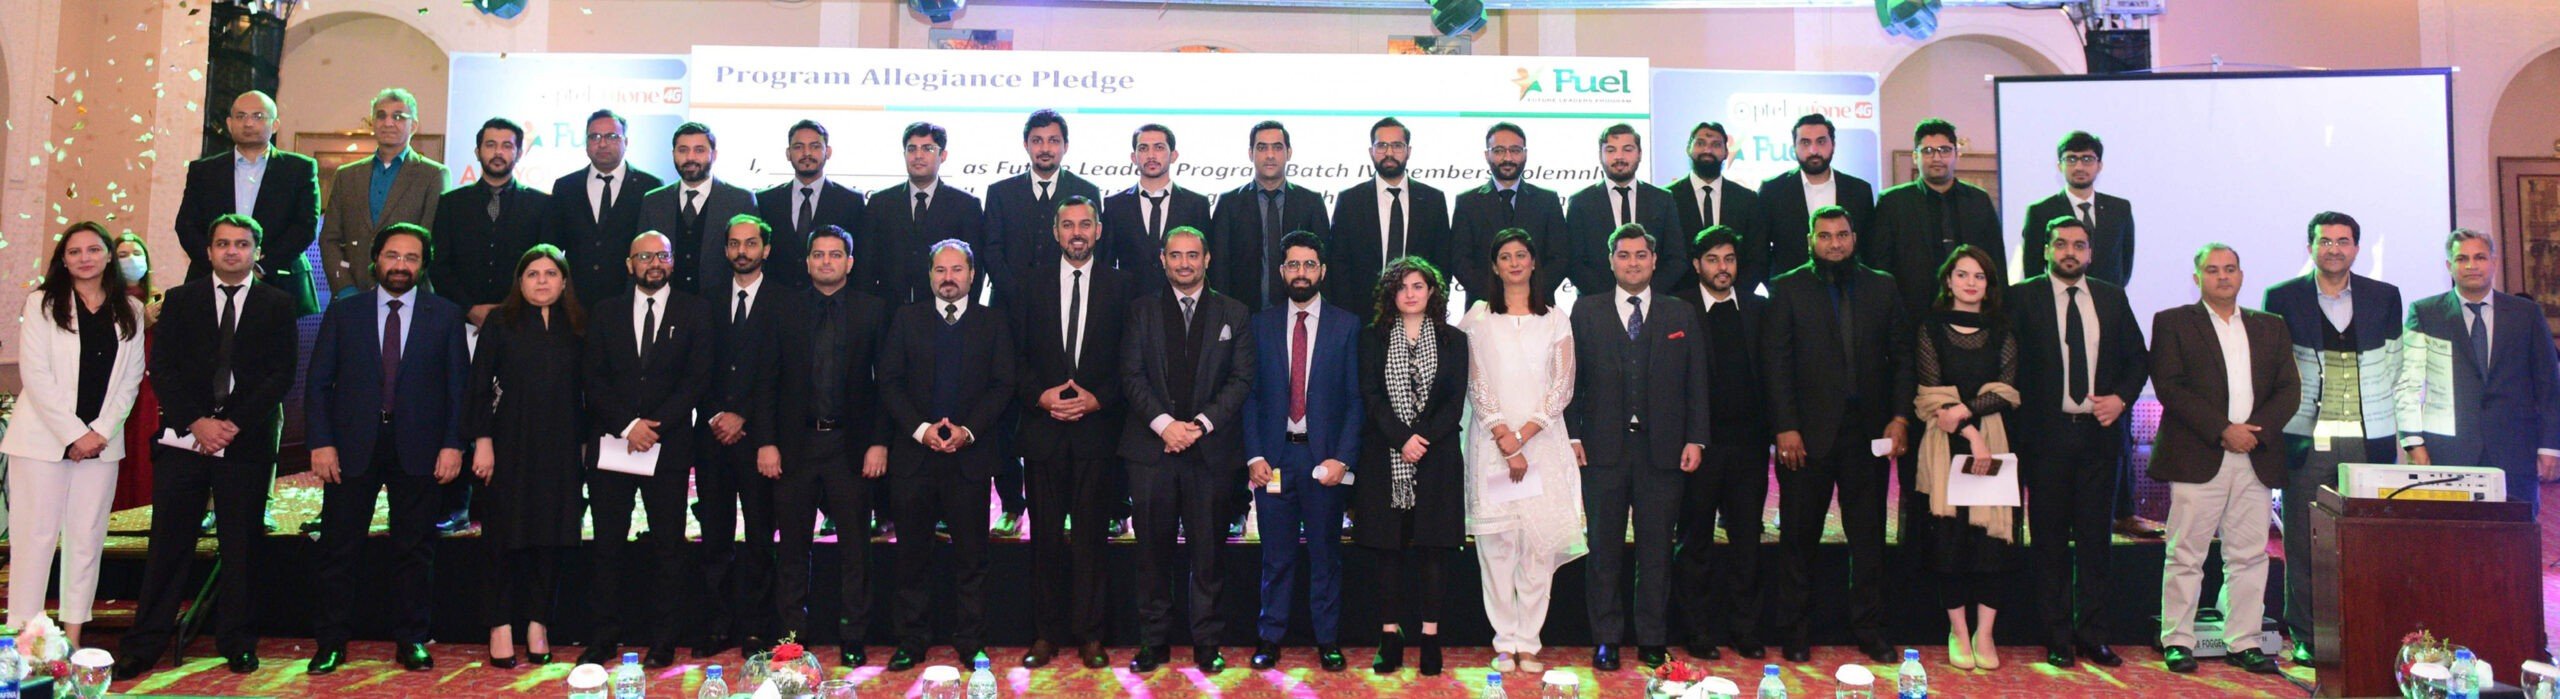 PTCL & Ufone welcome 4th batch of FUEL leadership development program